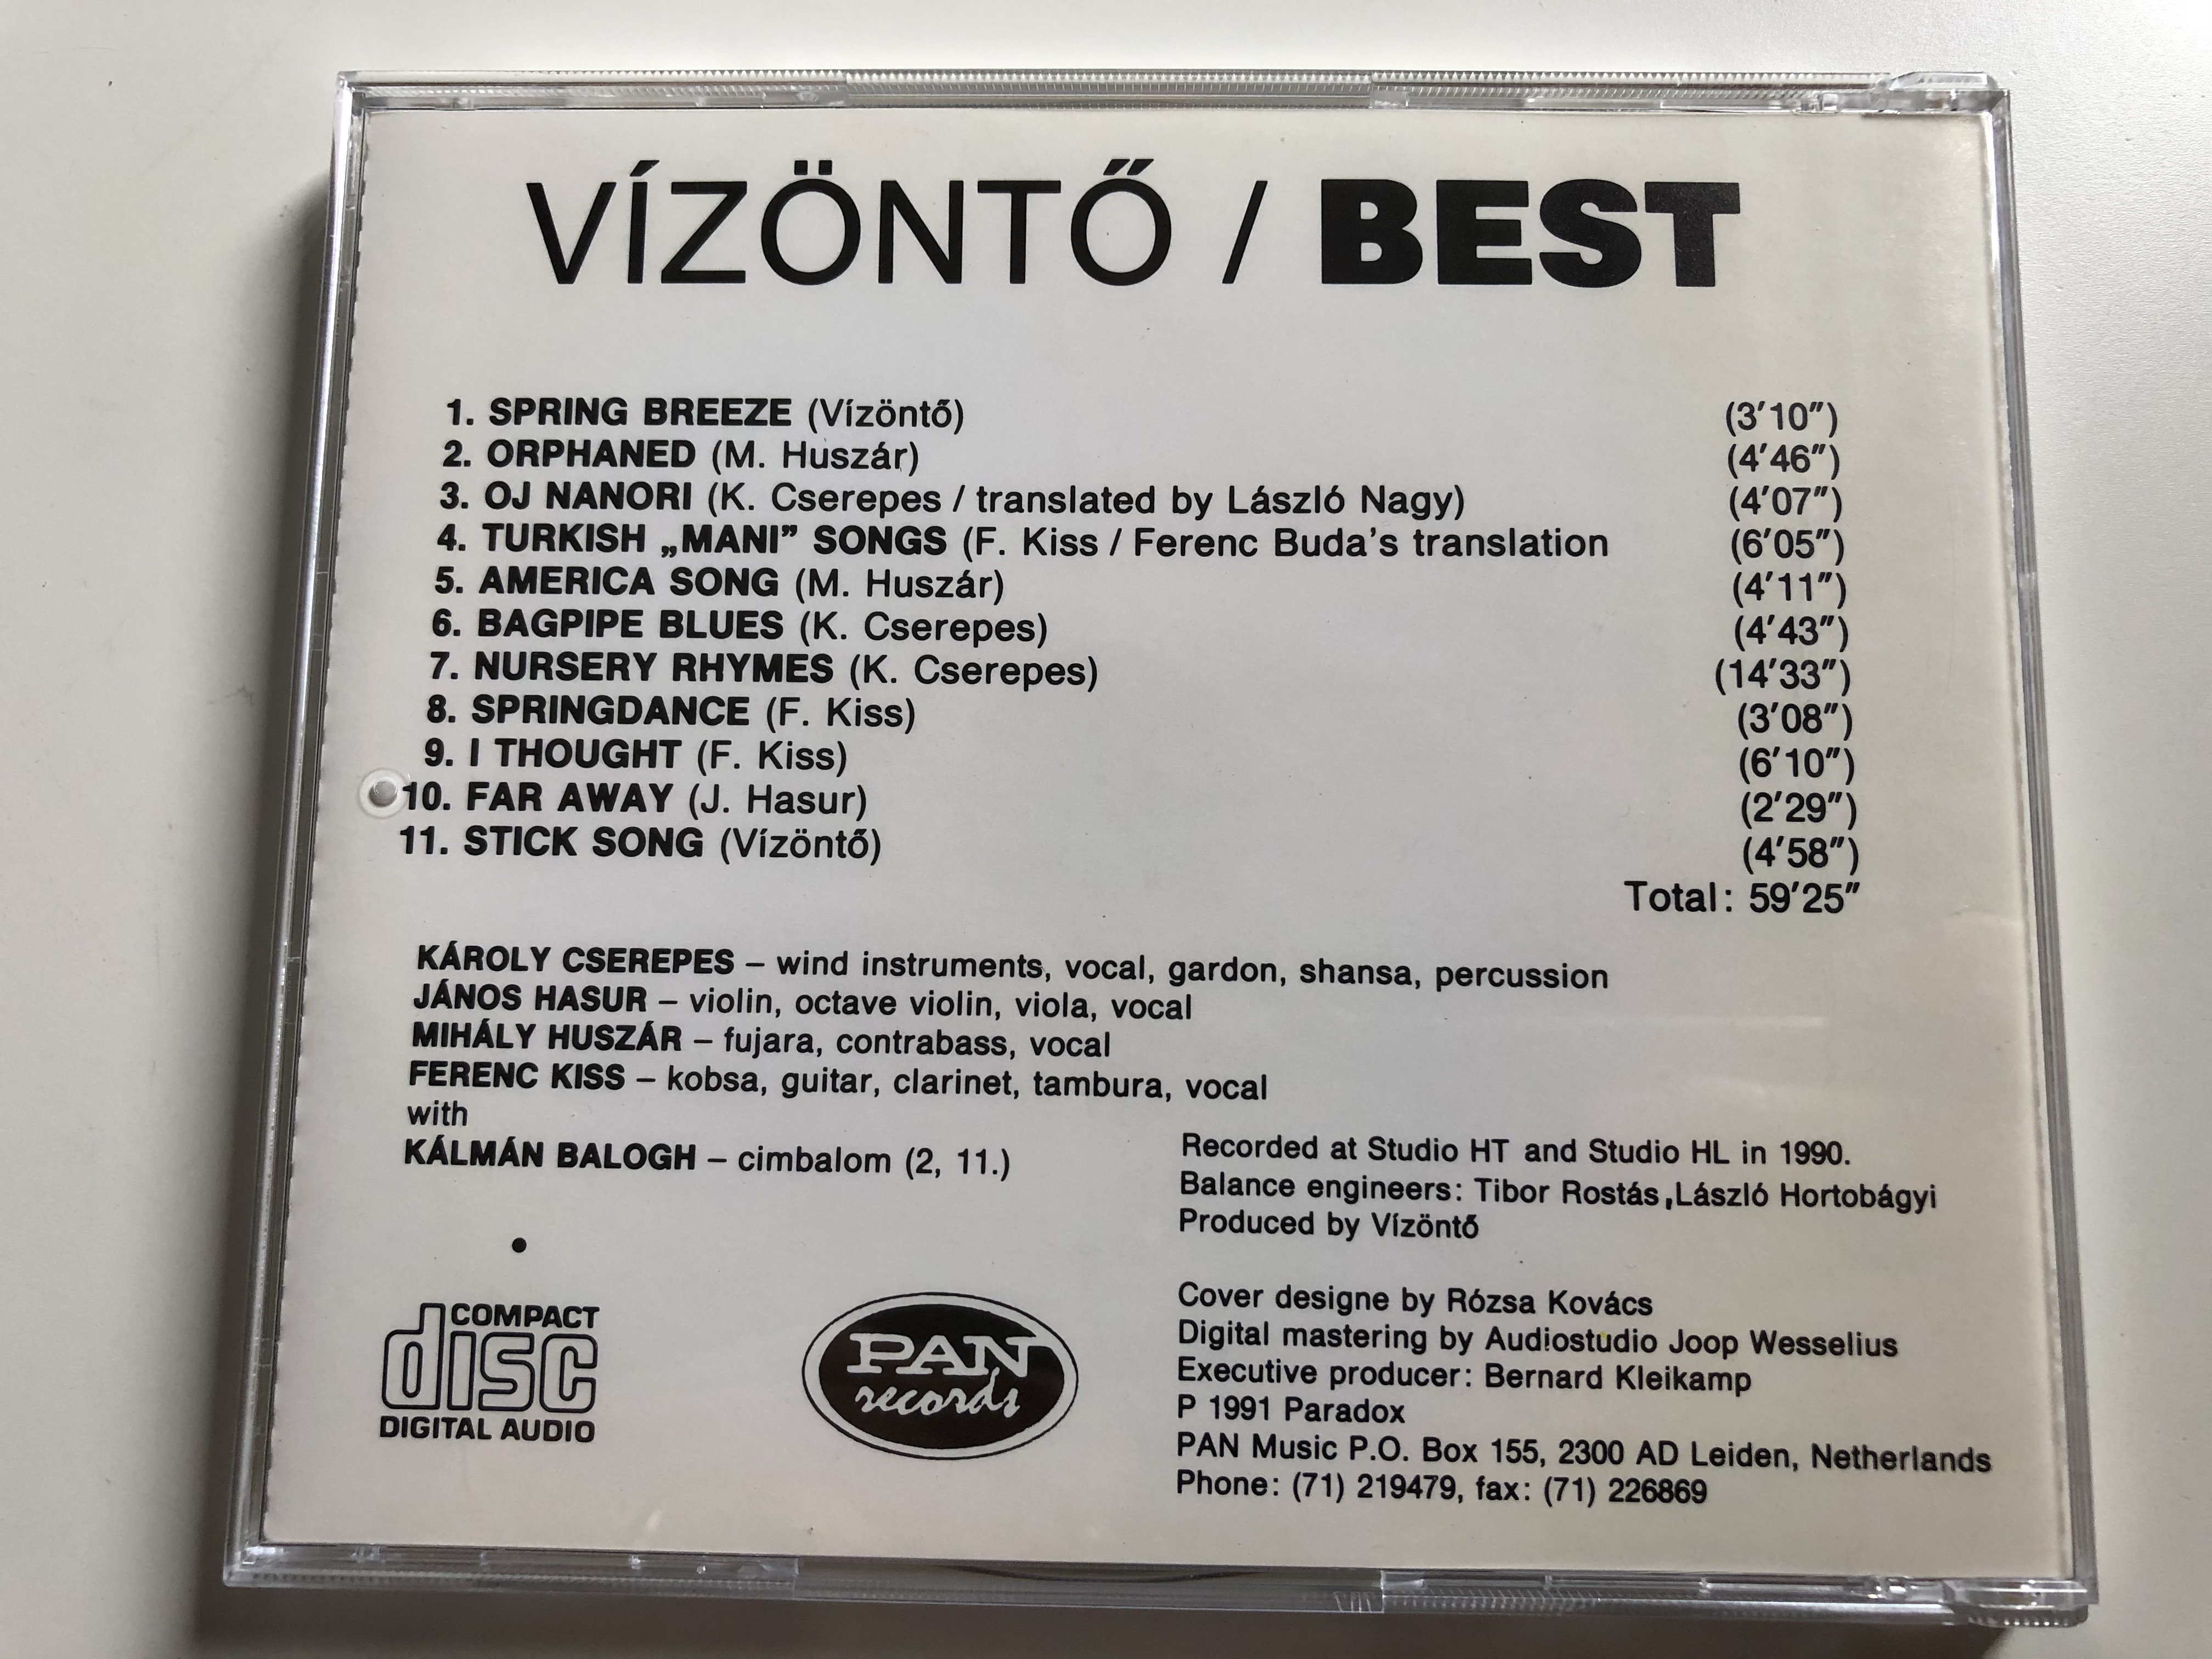 v-z-nt-best-pan-records-audio-cd-1991-pan-145-cd-4-.jpg